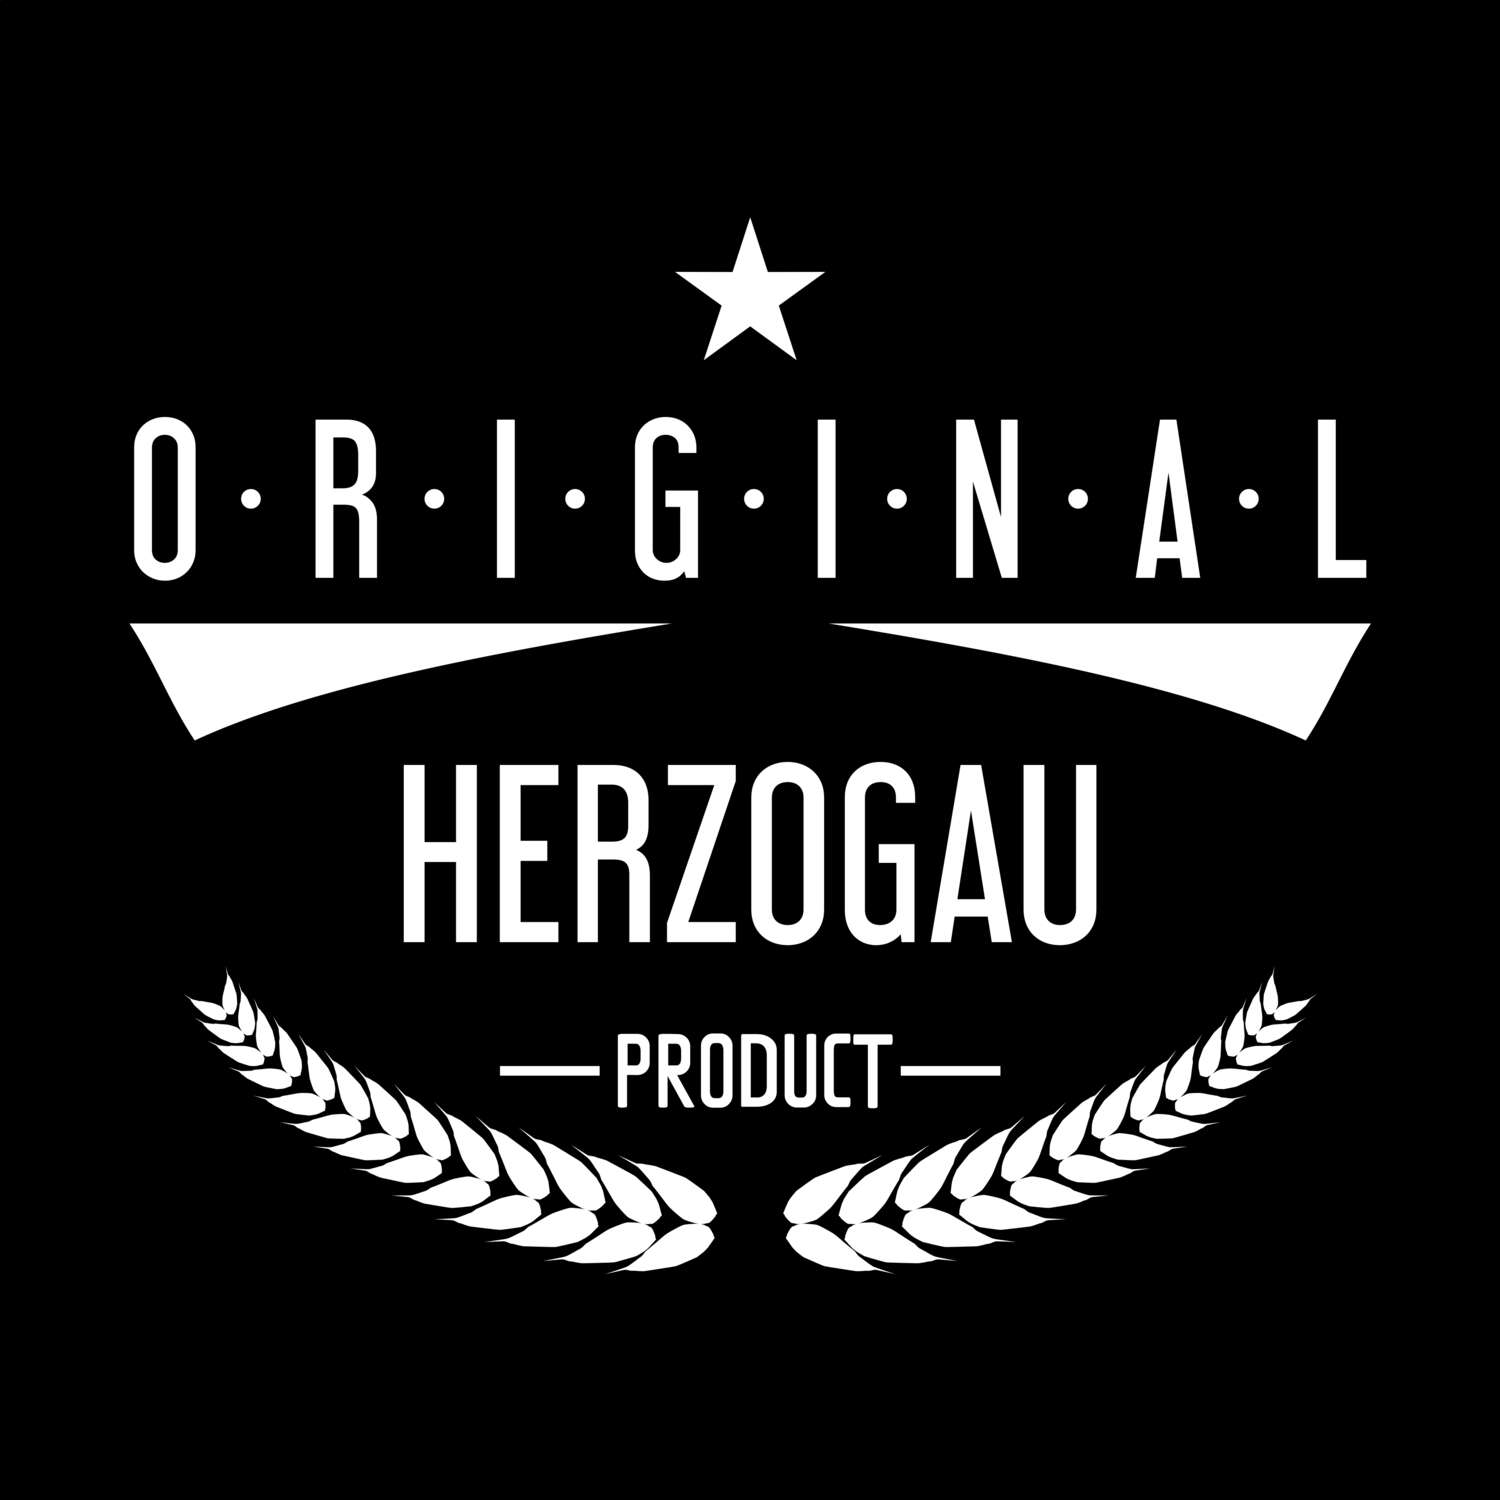 Herzogau T-Shirt »Original Product«